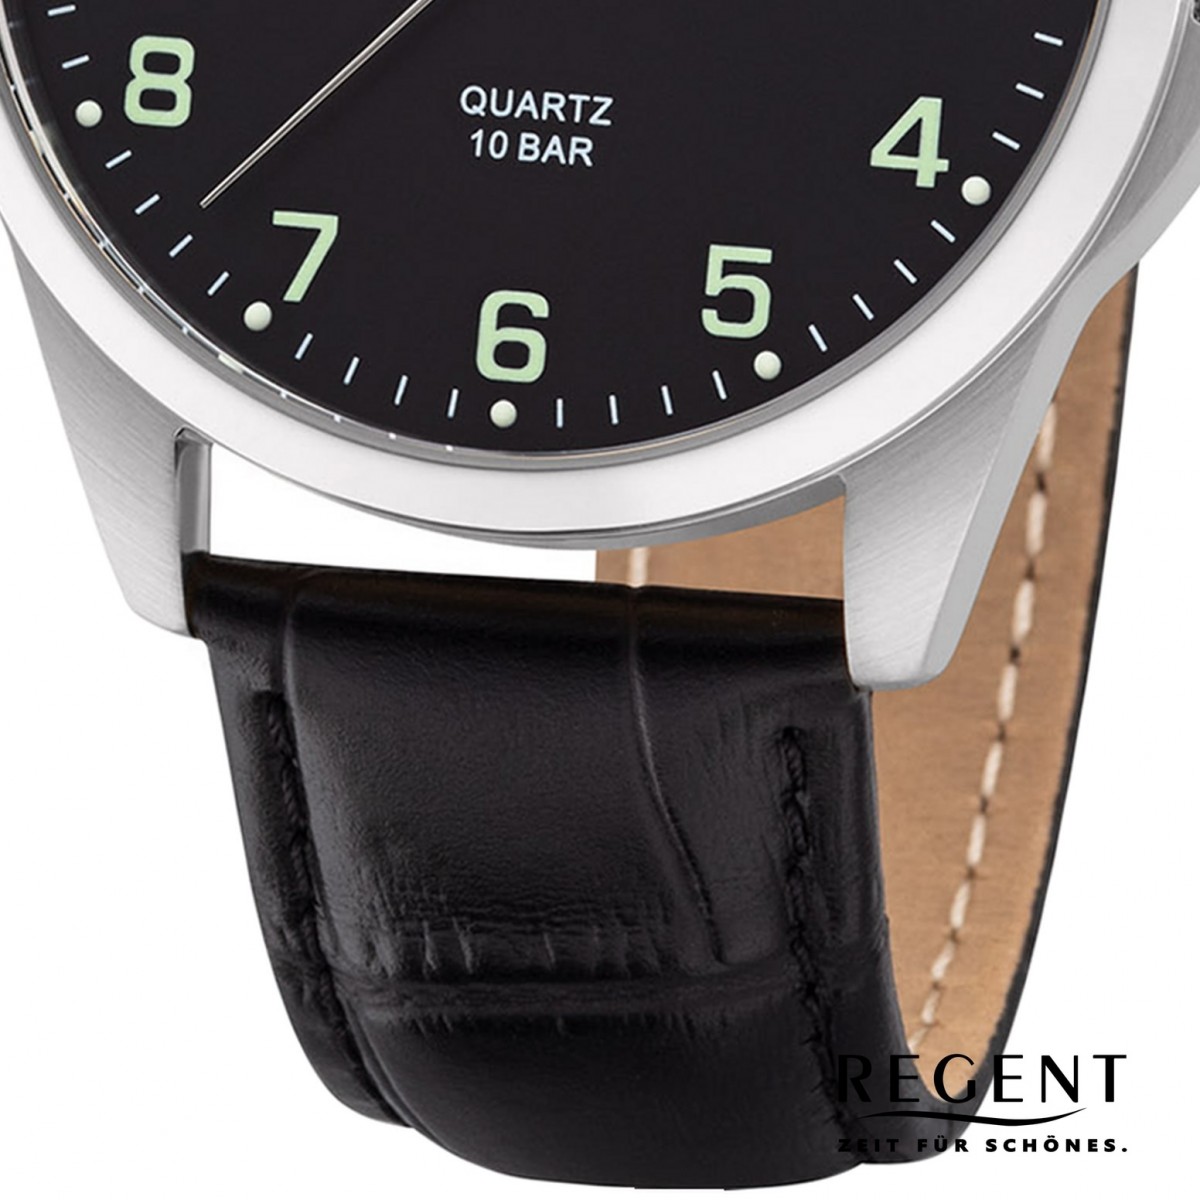 Regent Herren Armbanduhr Analog F-1227 Quarz-Uhr Leder schwarz URF1227